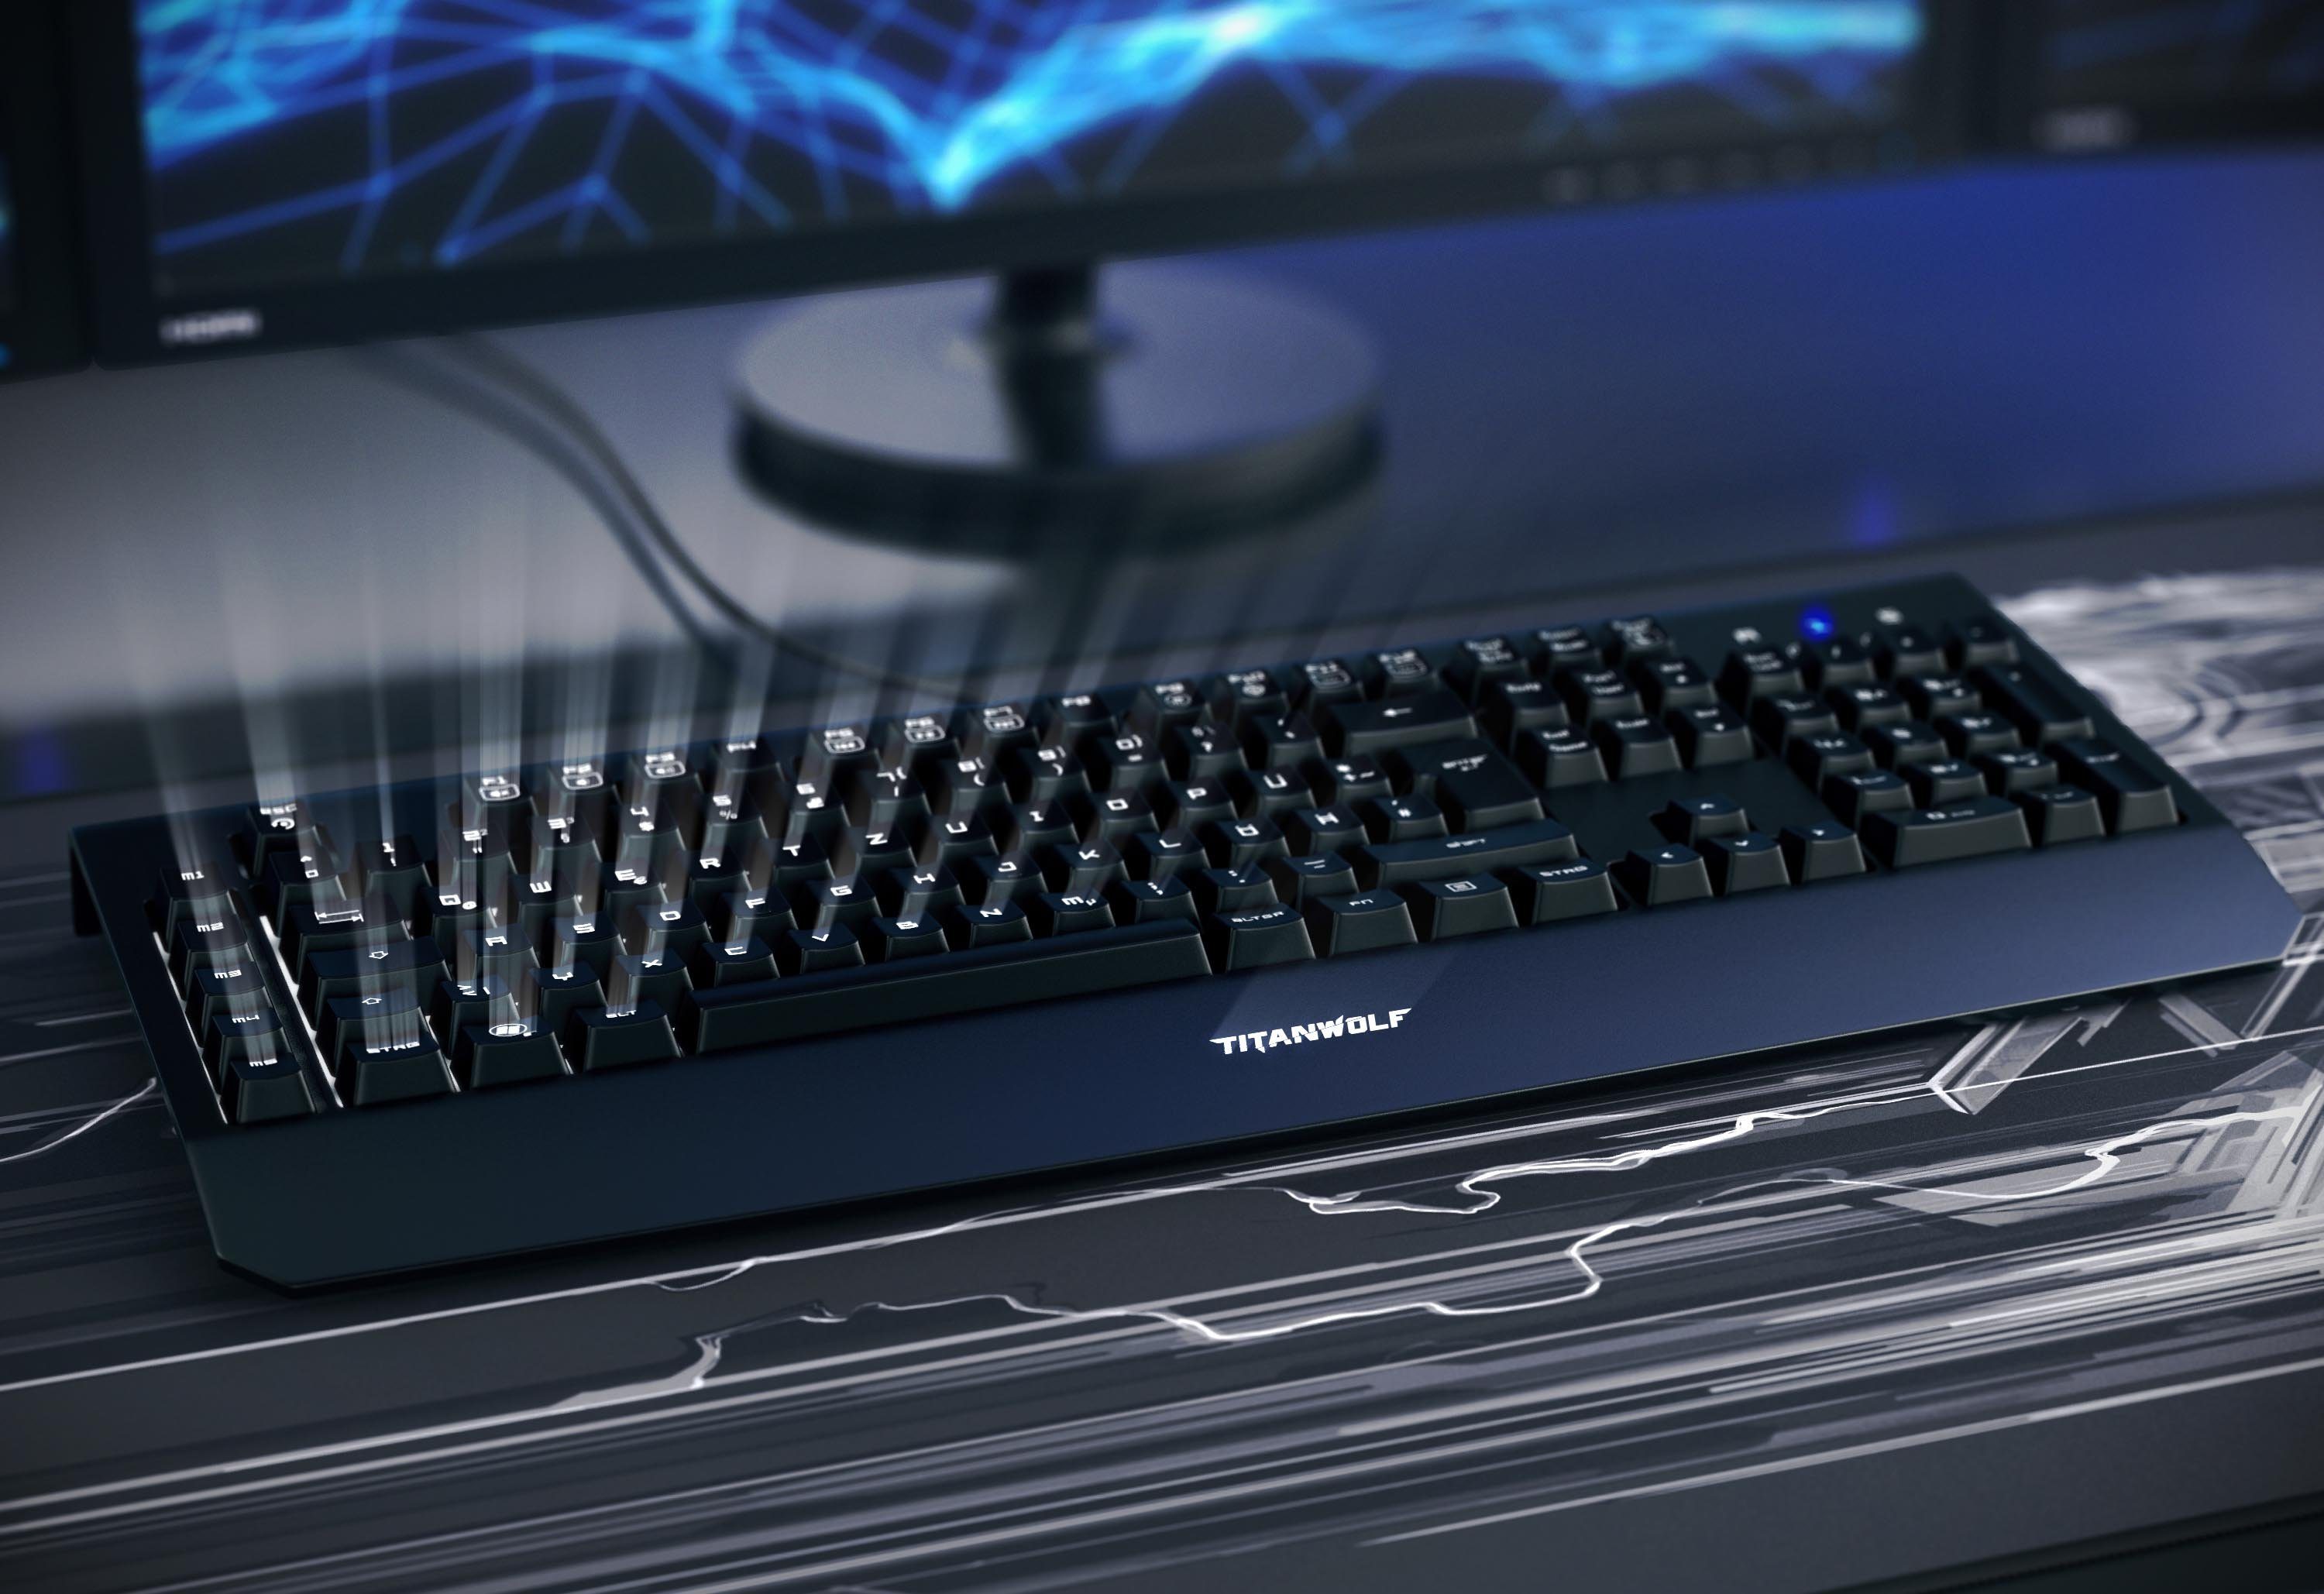 (mechanisch, "Enforcer" QWERTZ Switches) Kailh Titanwolf / Beleuchtung Gaming-Tastatur LED Blue /